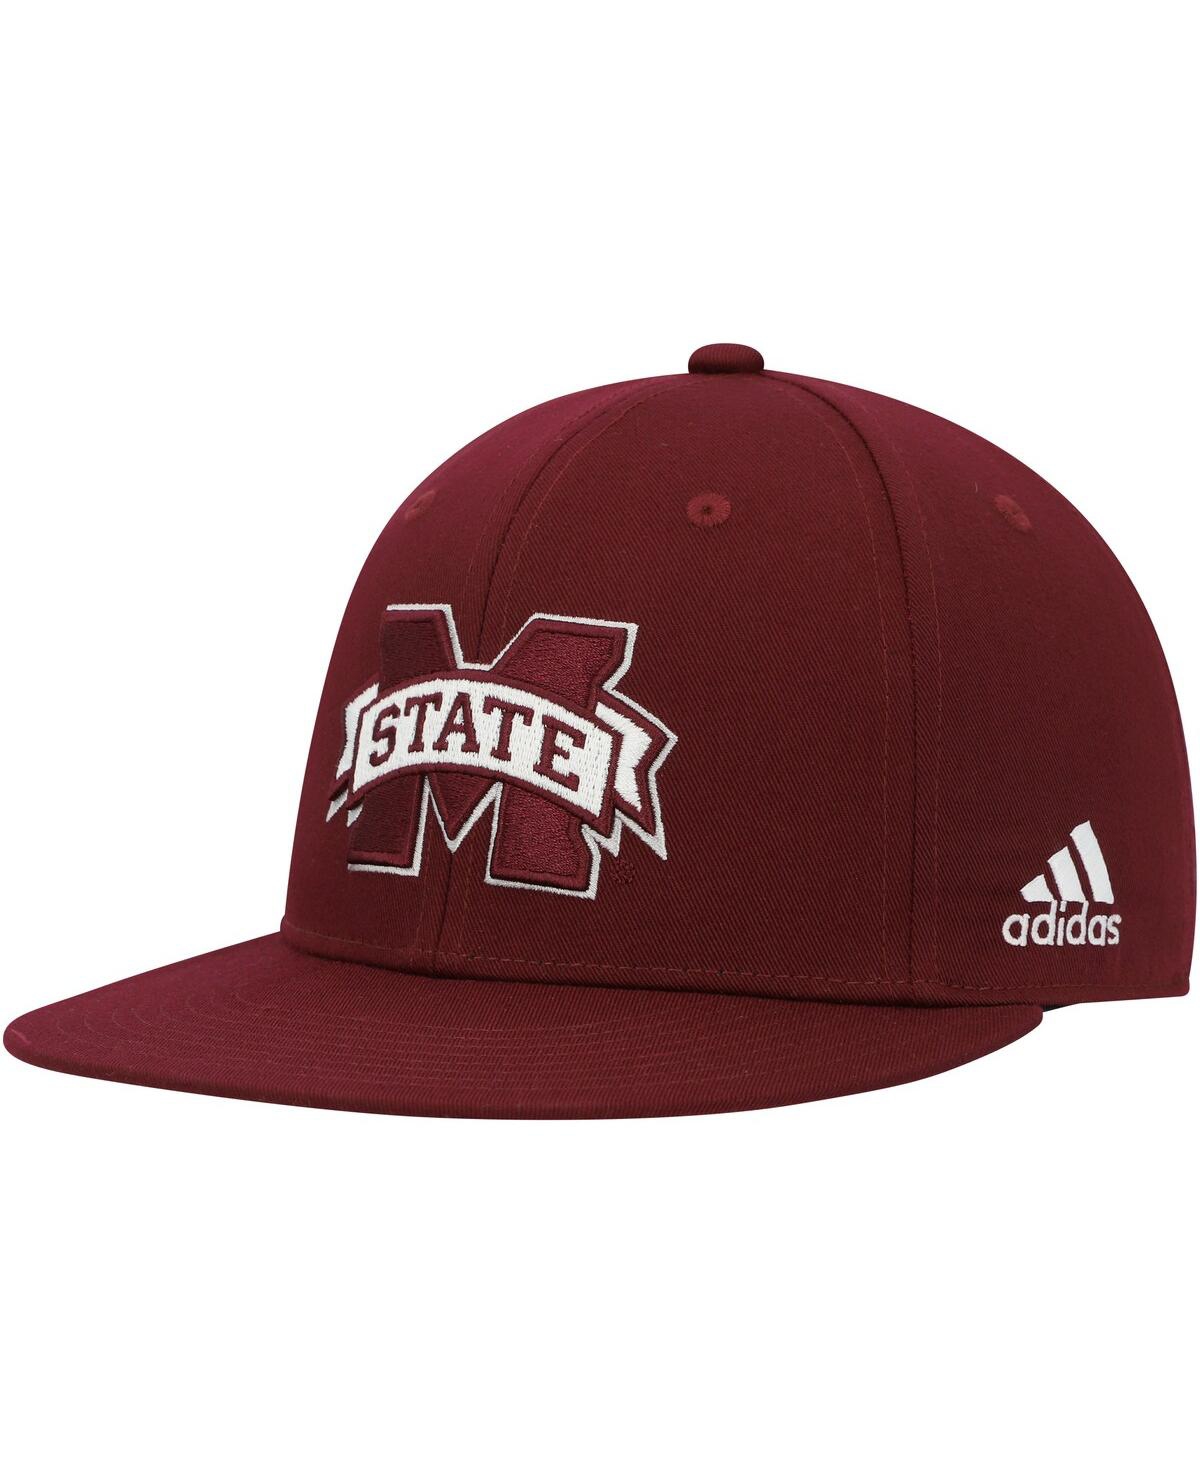 Shop Adidas Originals Men's Adidas Maroon Mississippi State Bulldogs Sideline Snapback Hat